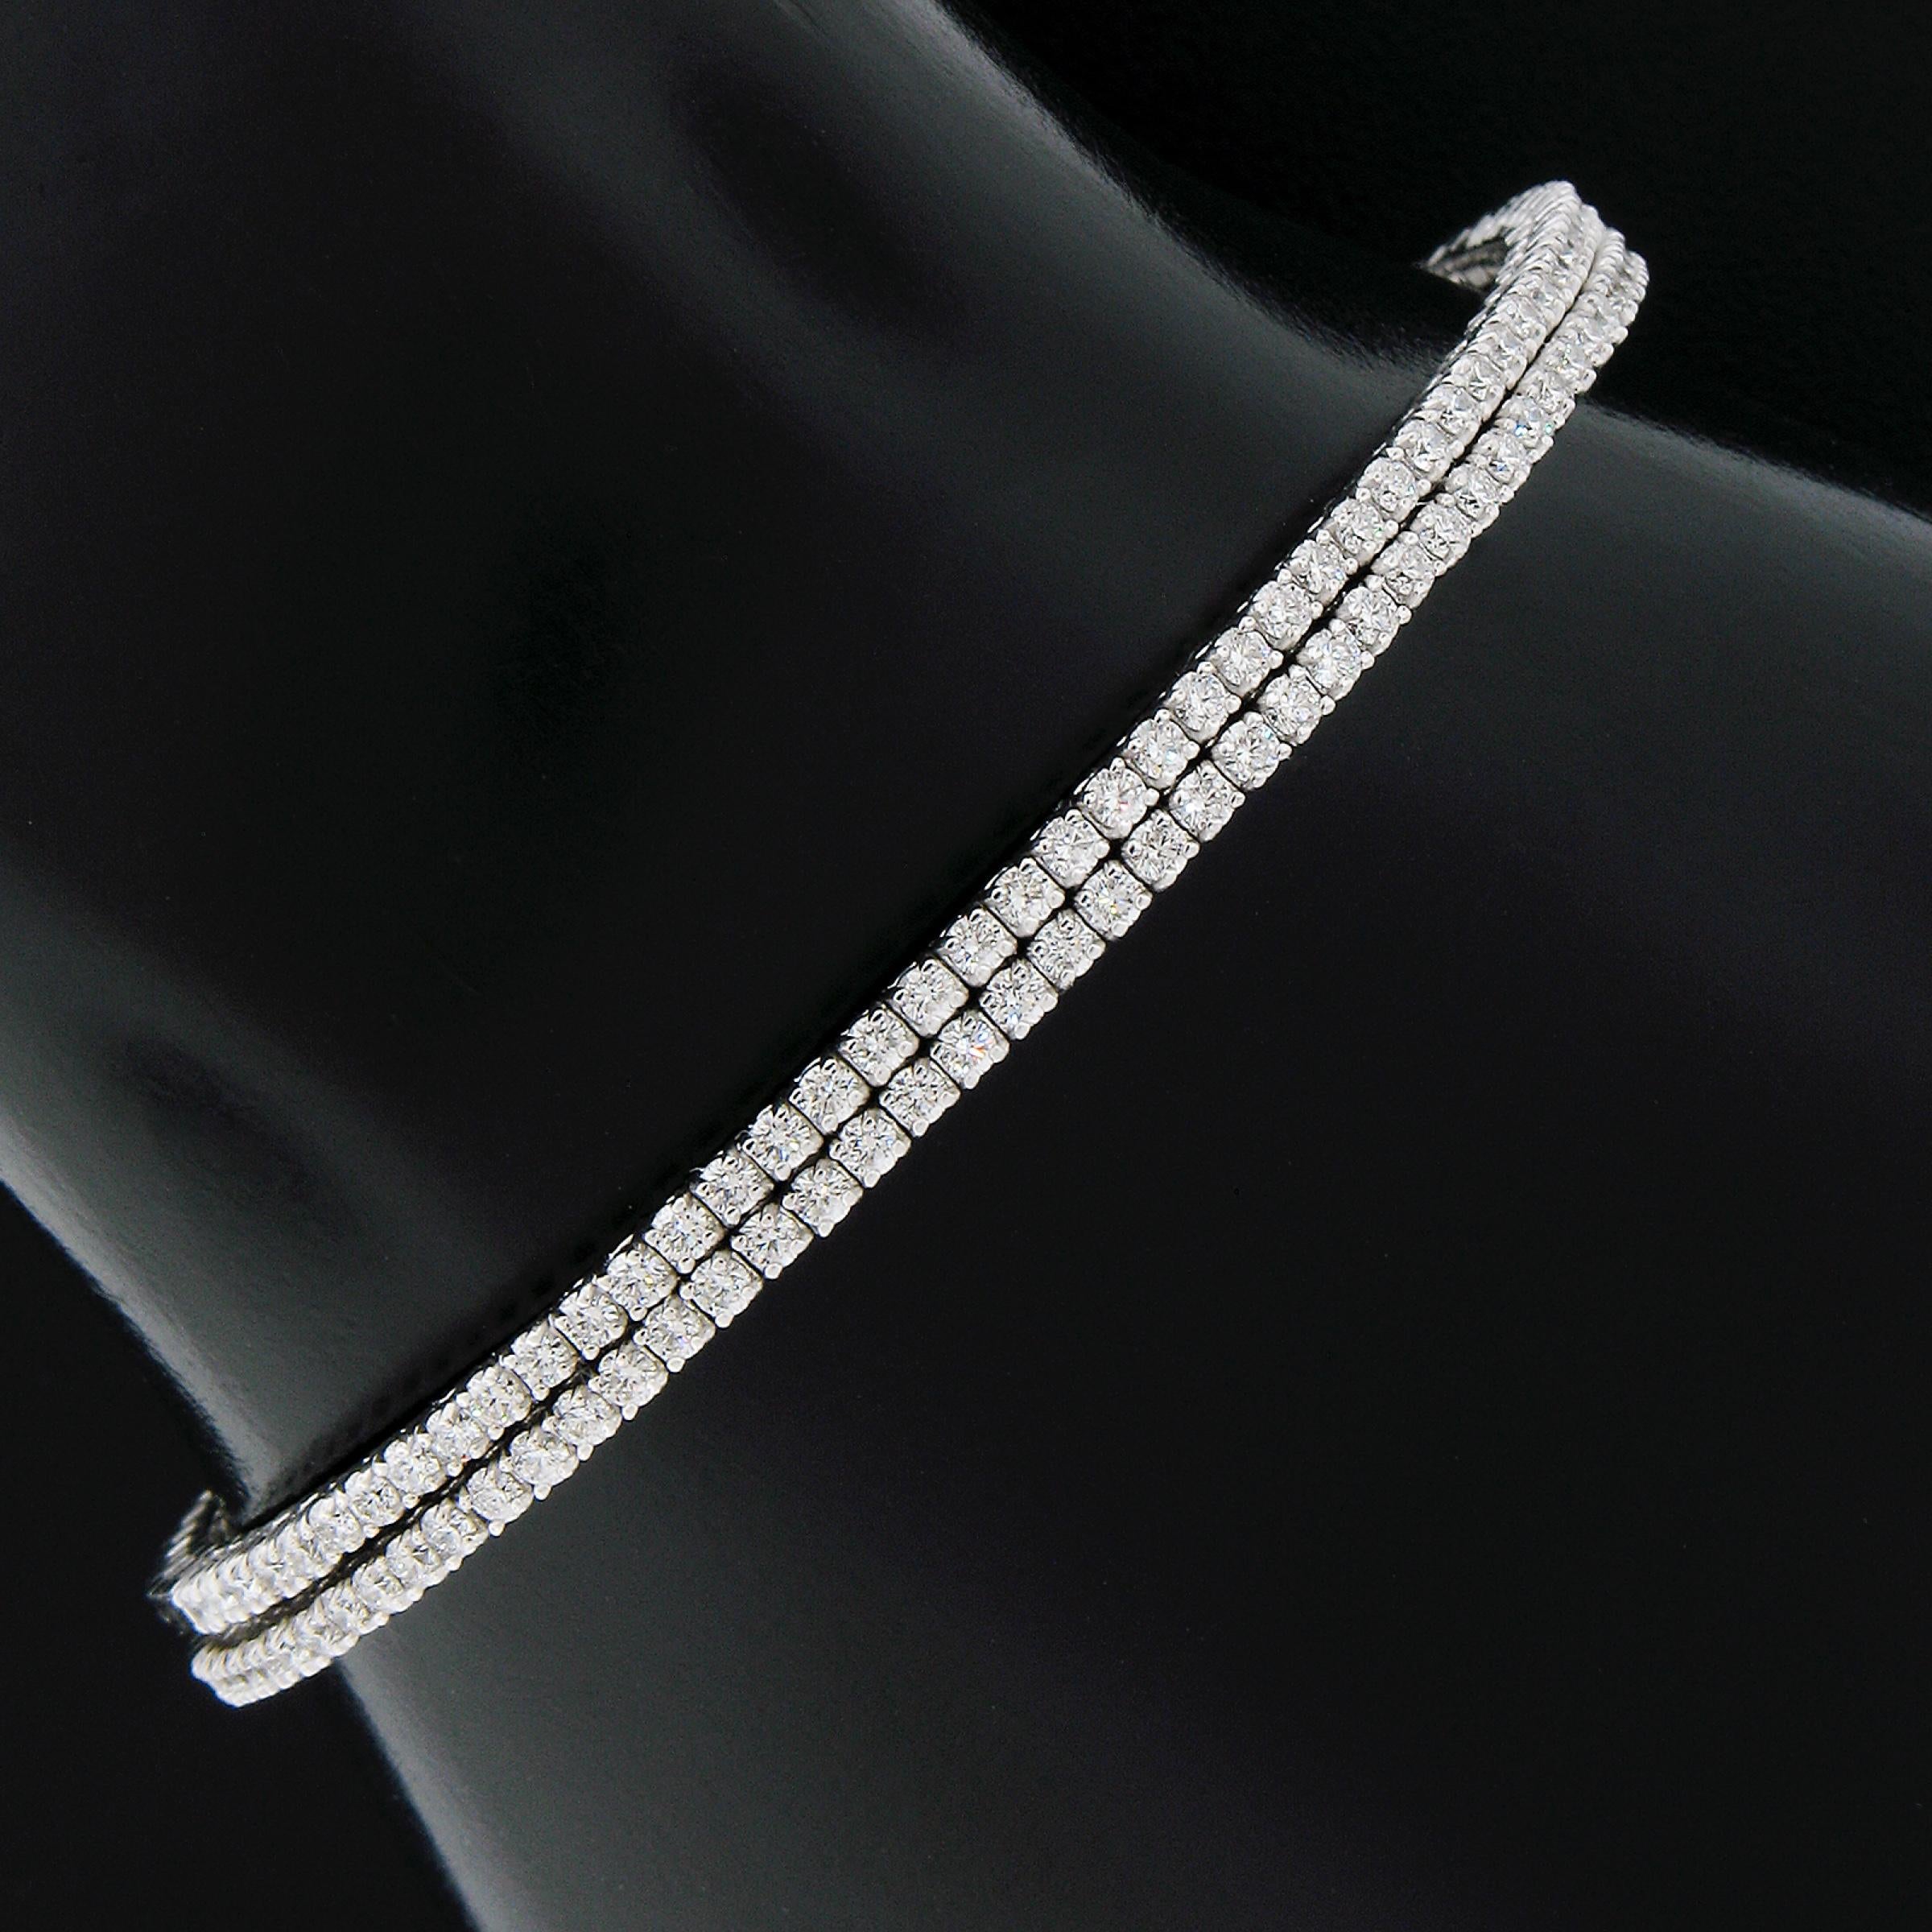 New Pair 14k White Gold 1.58ctw Fiery Diamond Flexible Stack Bangle Bracelet Set For Sale 2